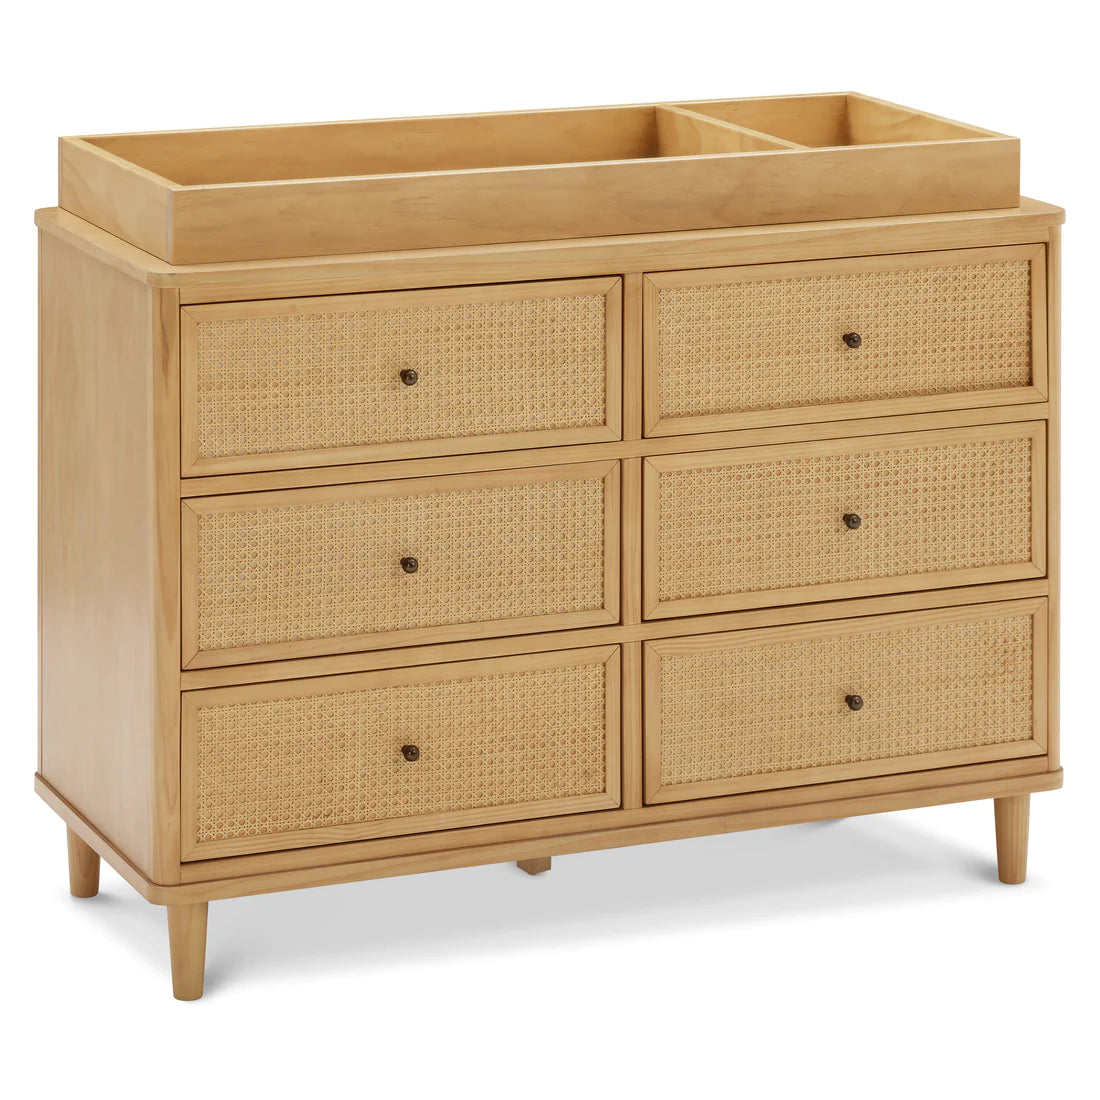 Honey / Honey Cane - Namesake Marin with Cane 6 Drawer Assembled Dresser Optional Change Tray